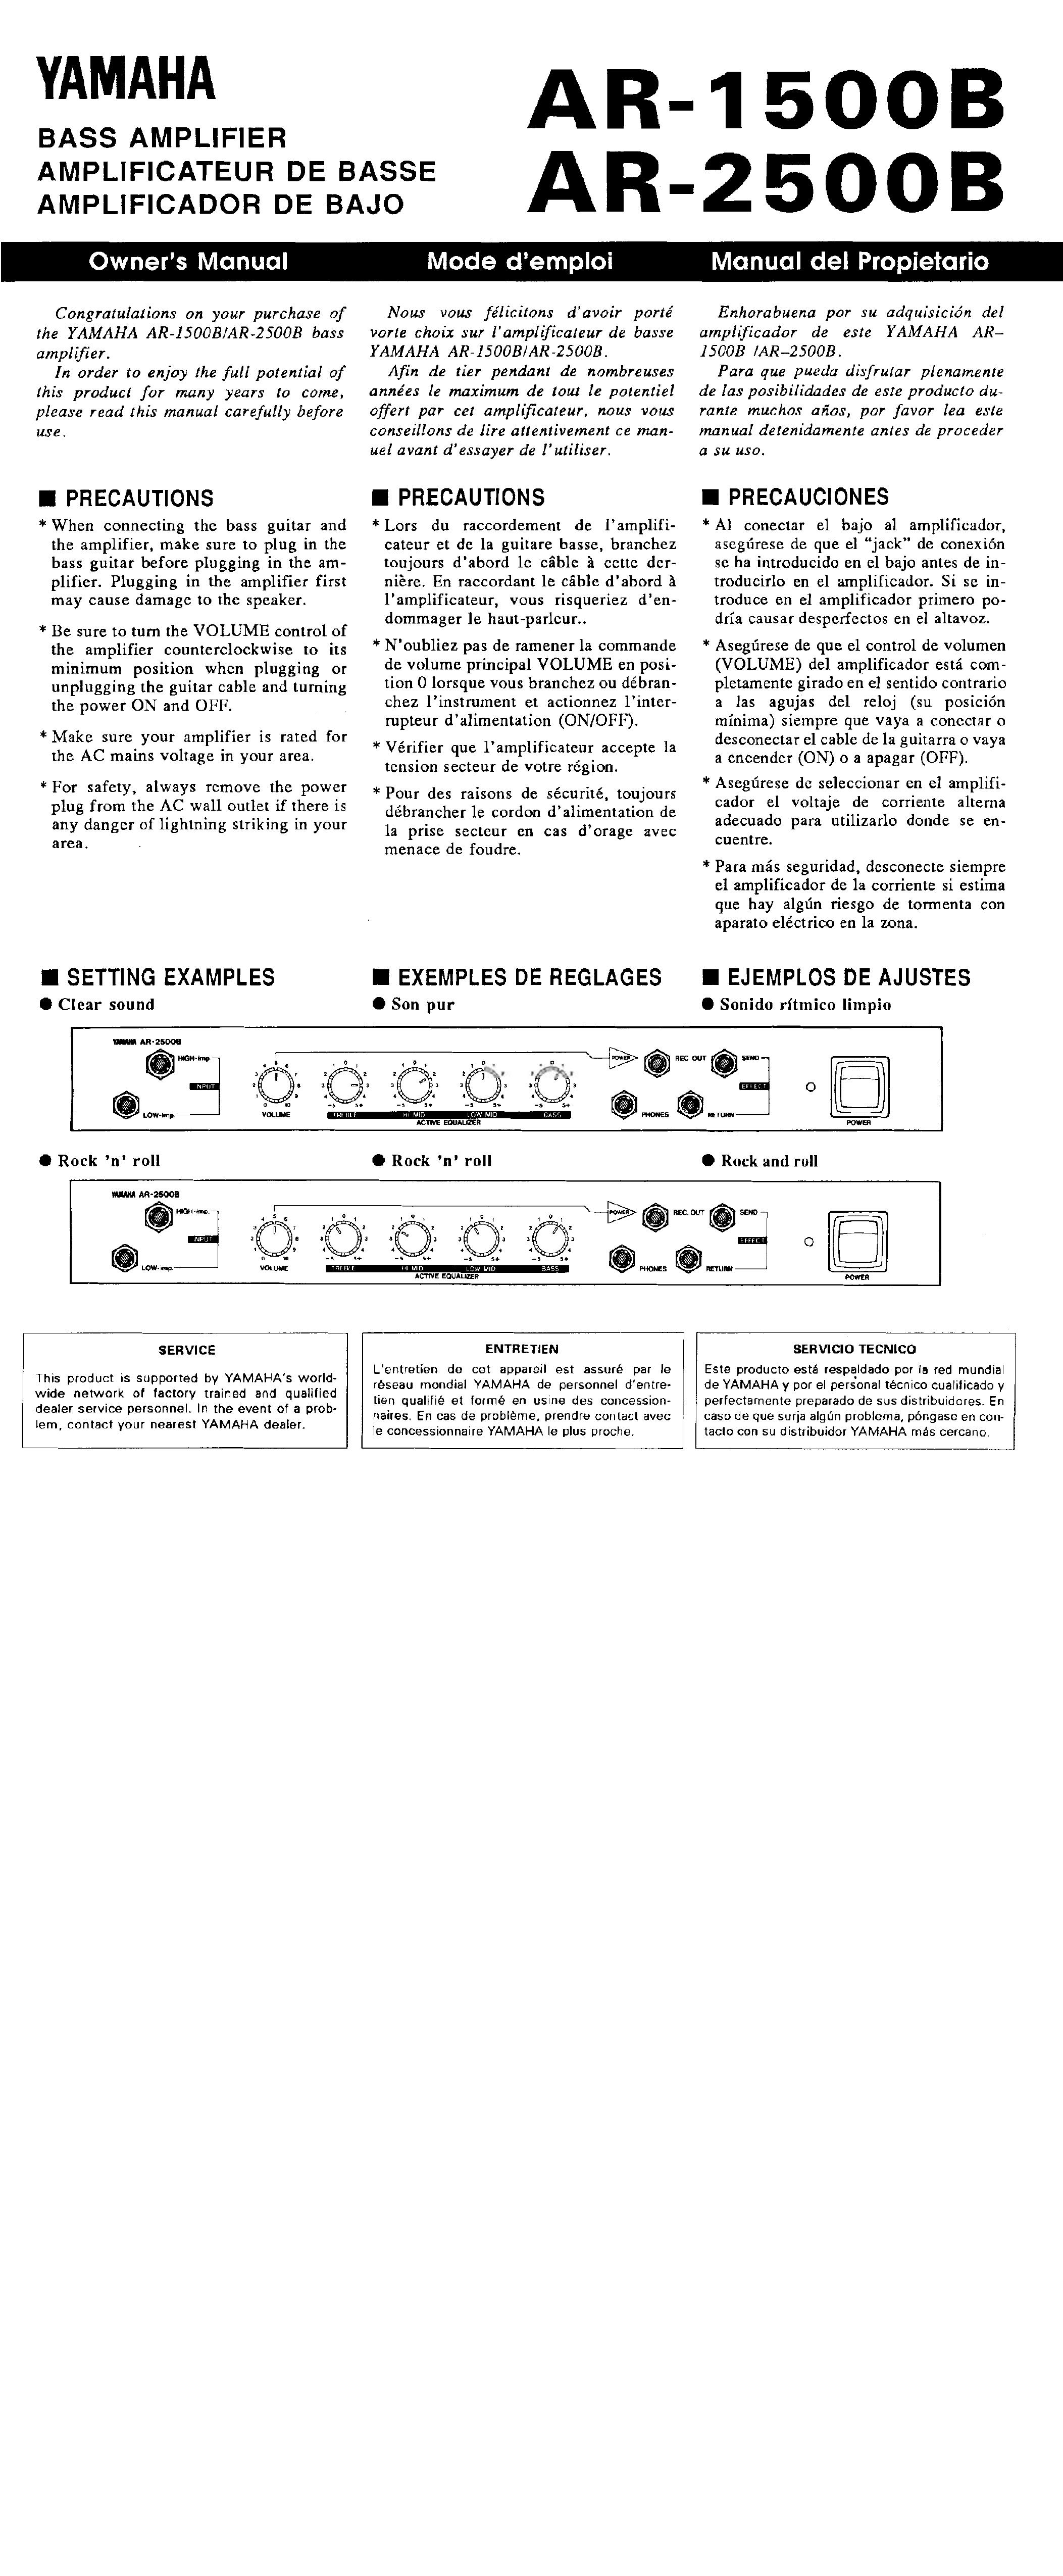 Yamaha AR-1500B Musical Instrument Amplifier User Manual